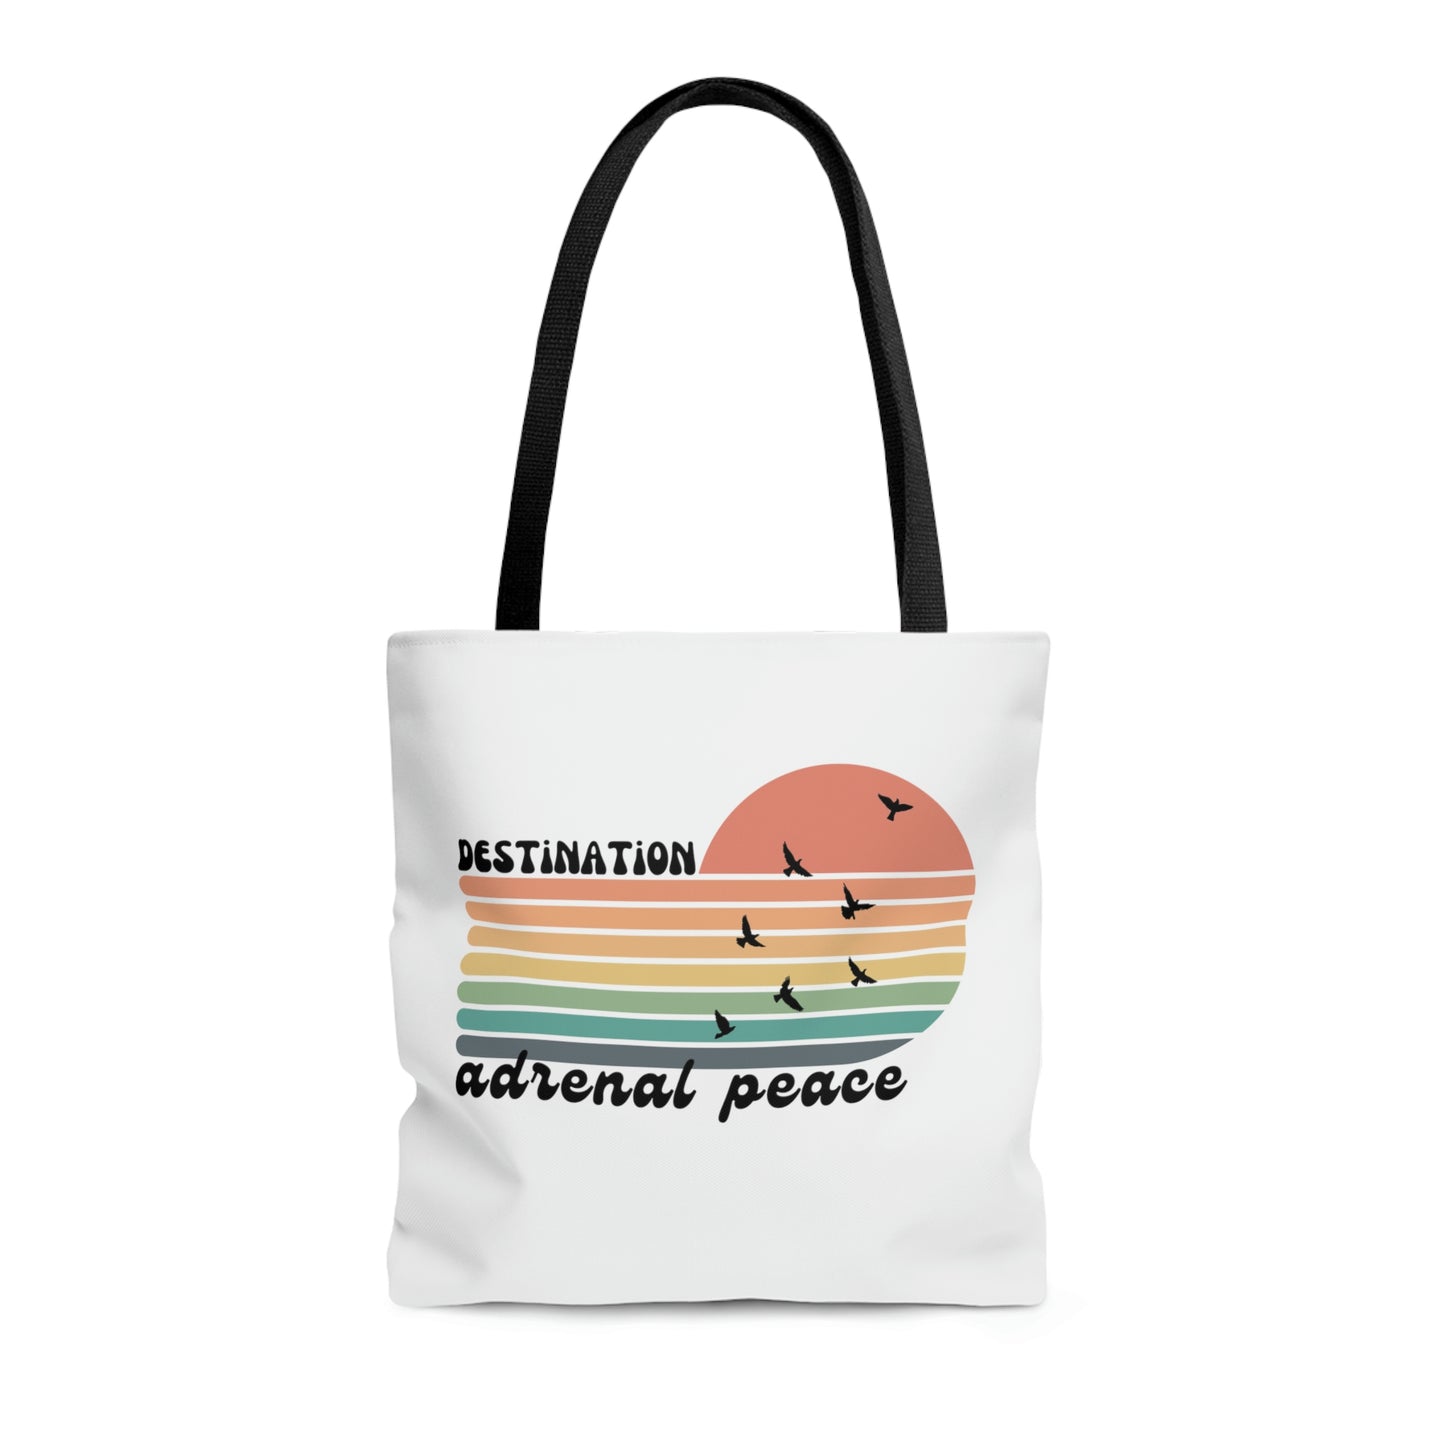 Destination: Adrenal Peace (retro rainbow) Tote Bag in 3 sizes